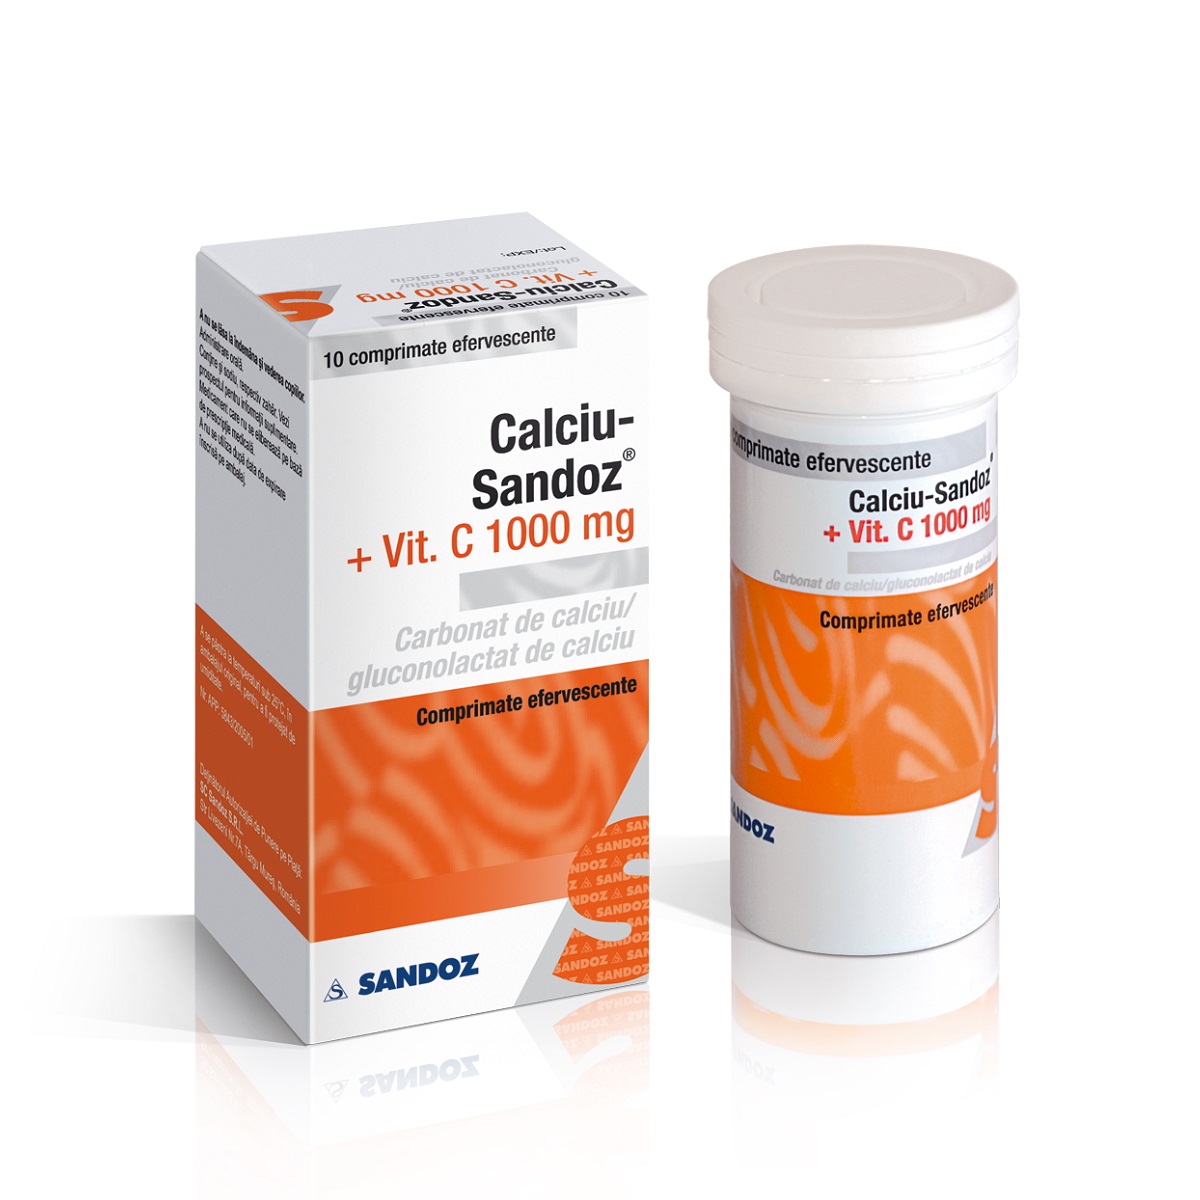 Multivitamine si minerale - Calcium Sandoz + Vitamina C 1000 x 10 comprimate efervescente, medik-on.ro